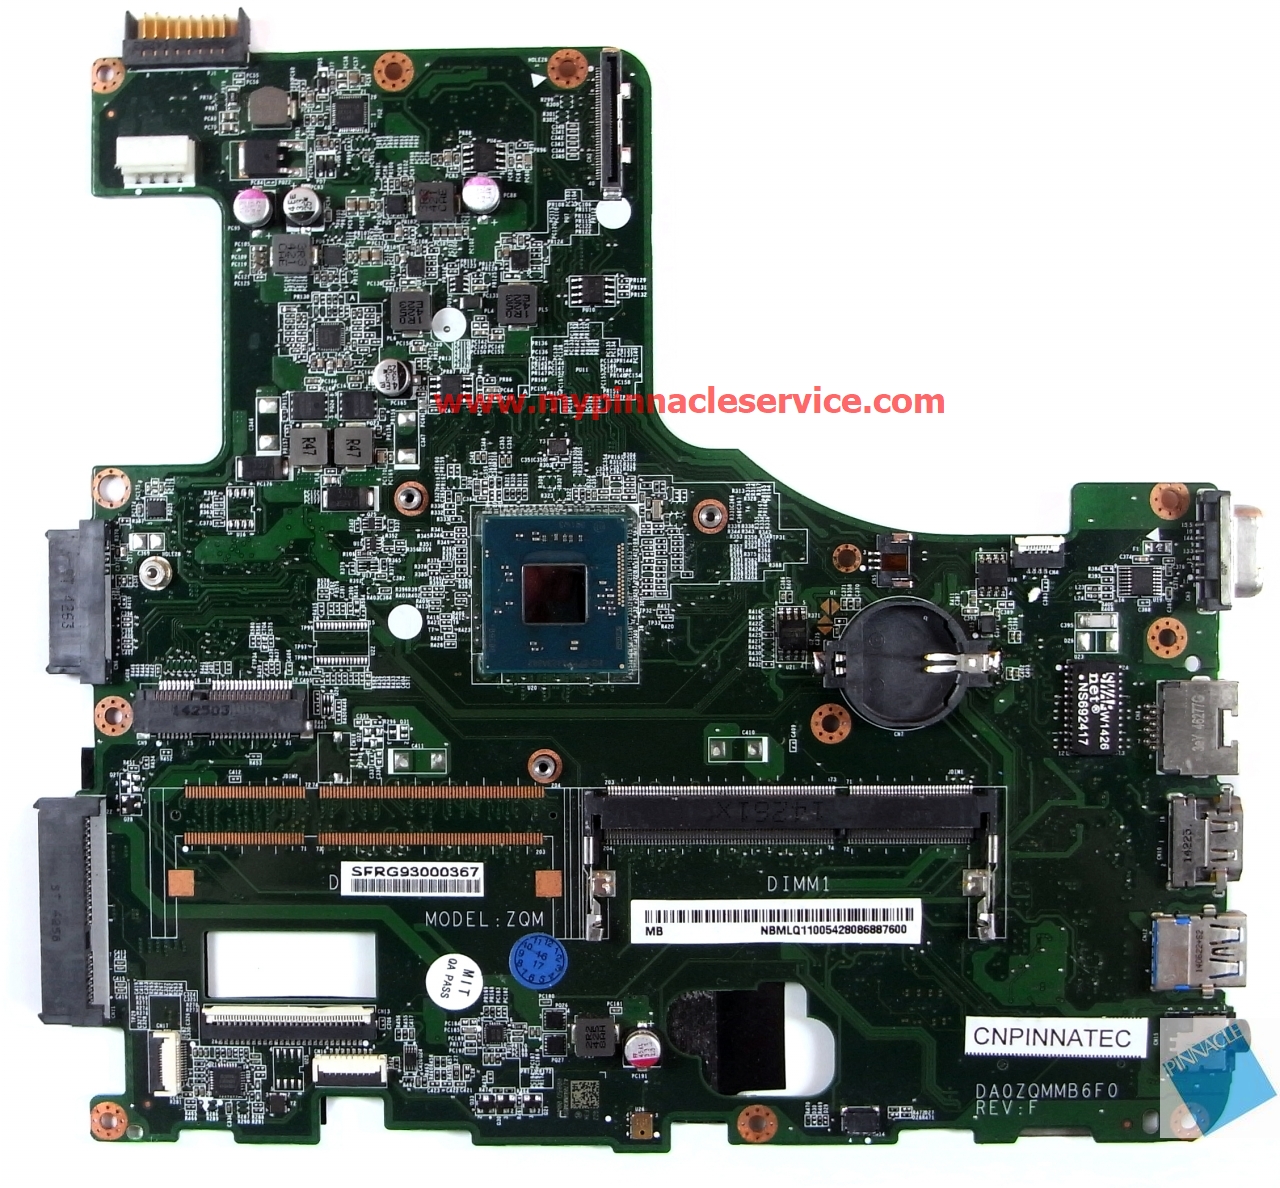 Nbmlq11005 Motherboard For Acer Aspire E5 411 E5 411g Da0zqmmb6f0 Zqm